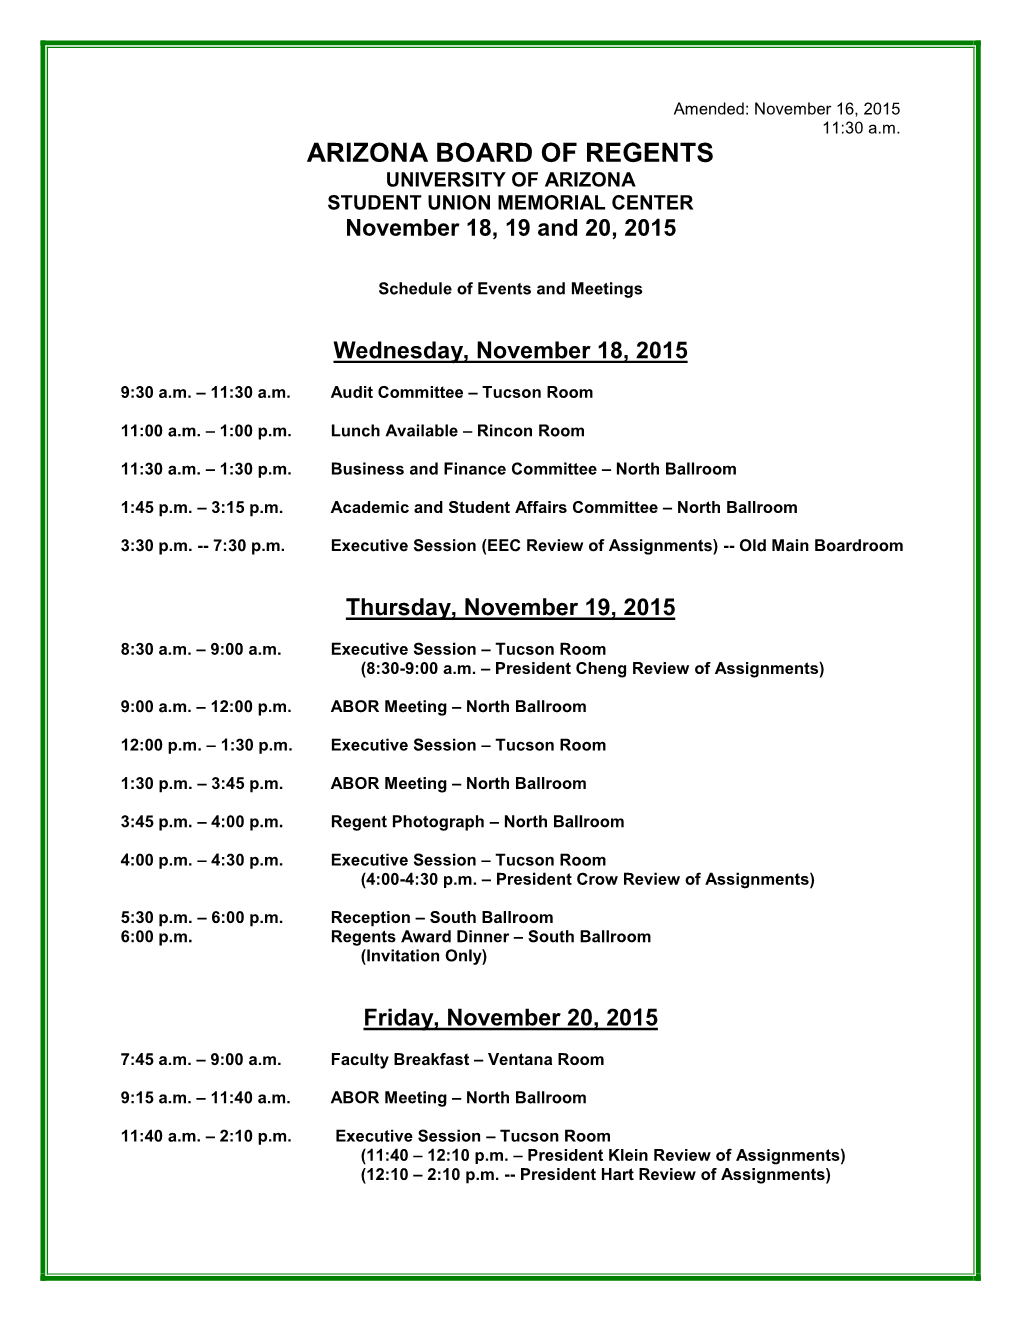 ARIZONA BOARD of REGENTS UNIVERSITY of ARIZONA STUDENT UNION MEMORIAL CENTER November 18, 19 and 20, 2015